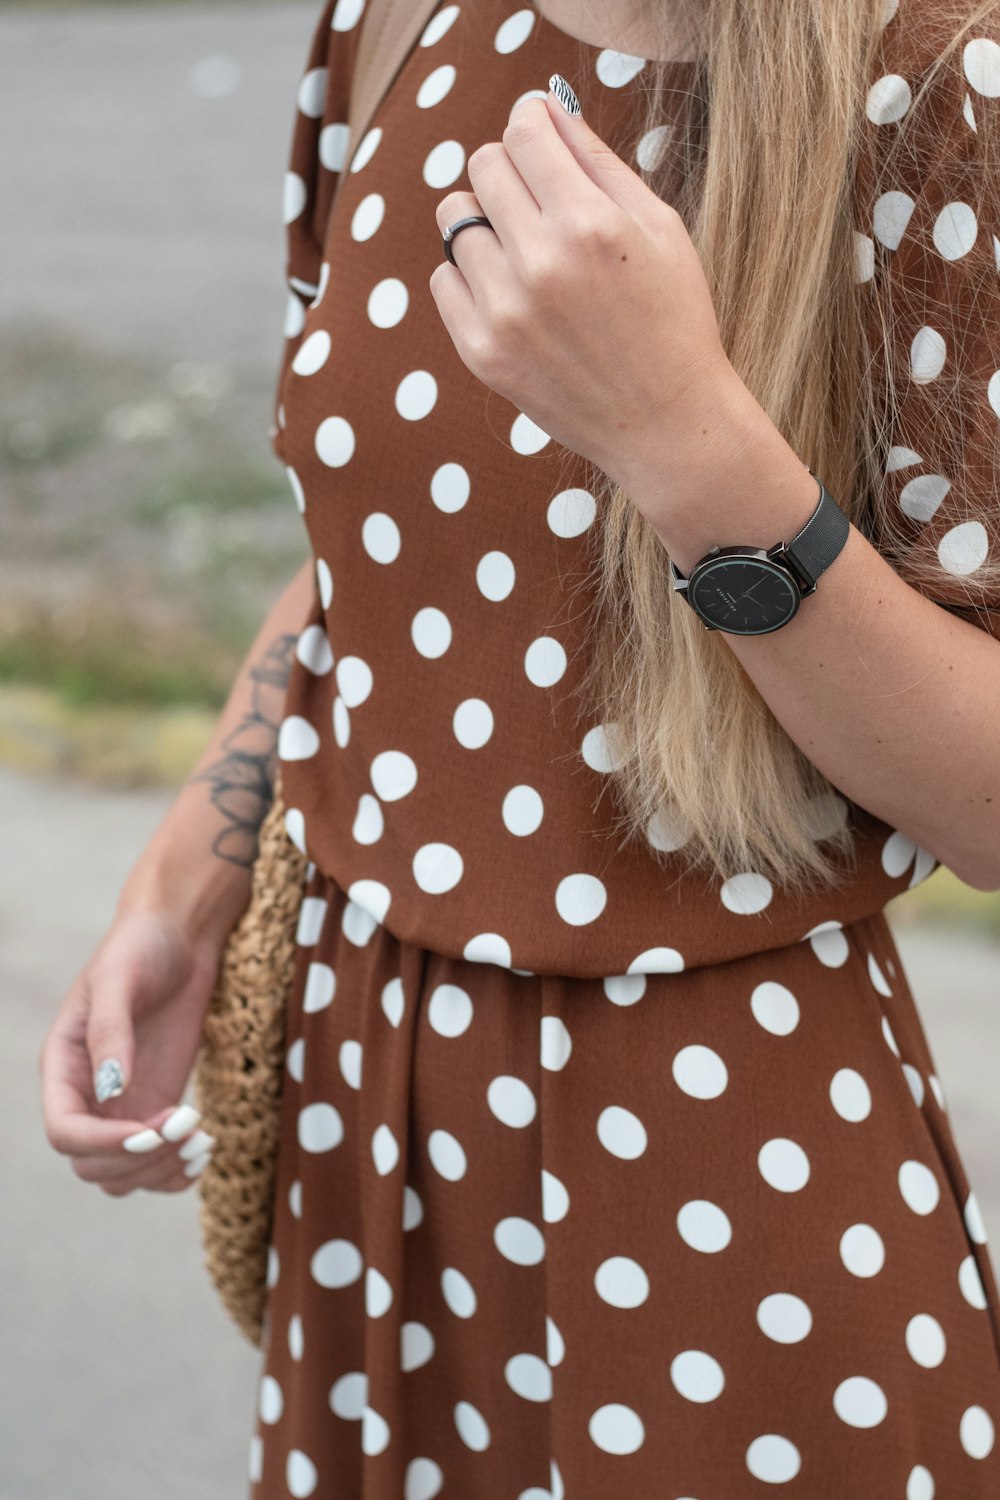 a woman wearing a brown and white polka dot dress